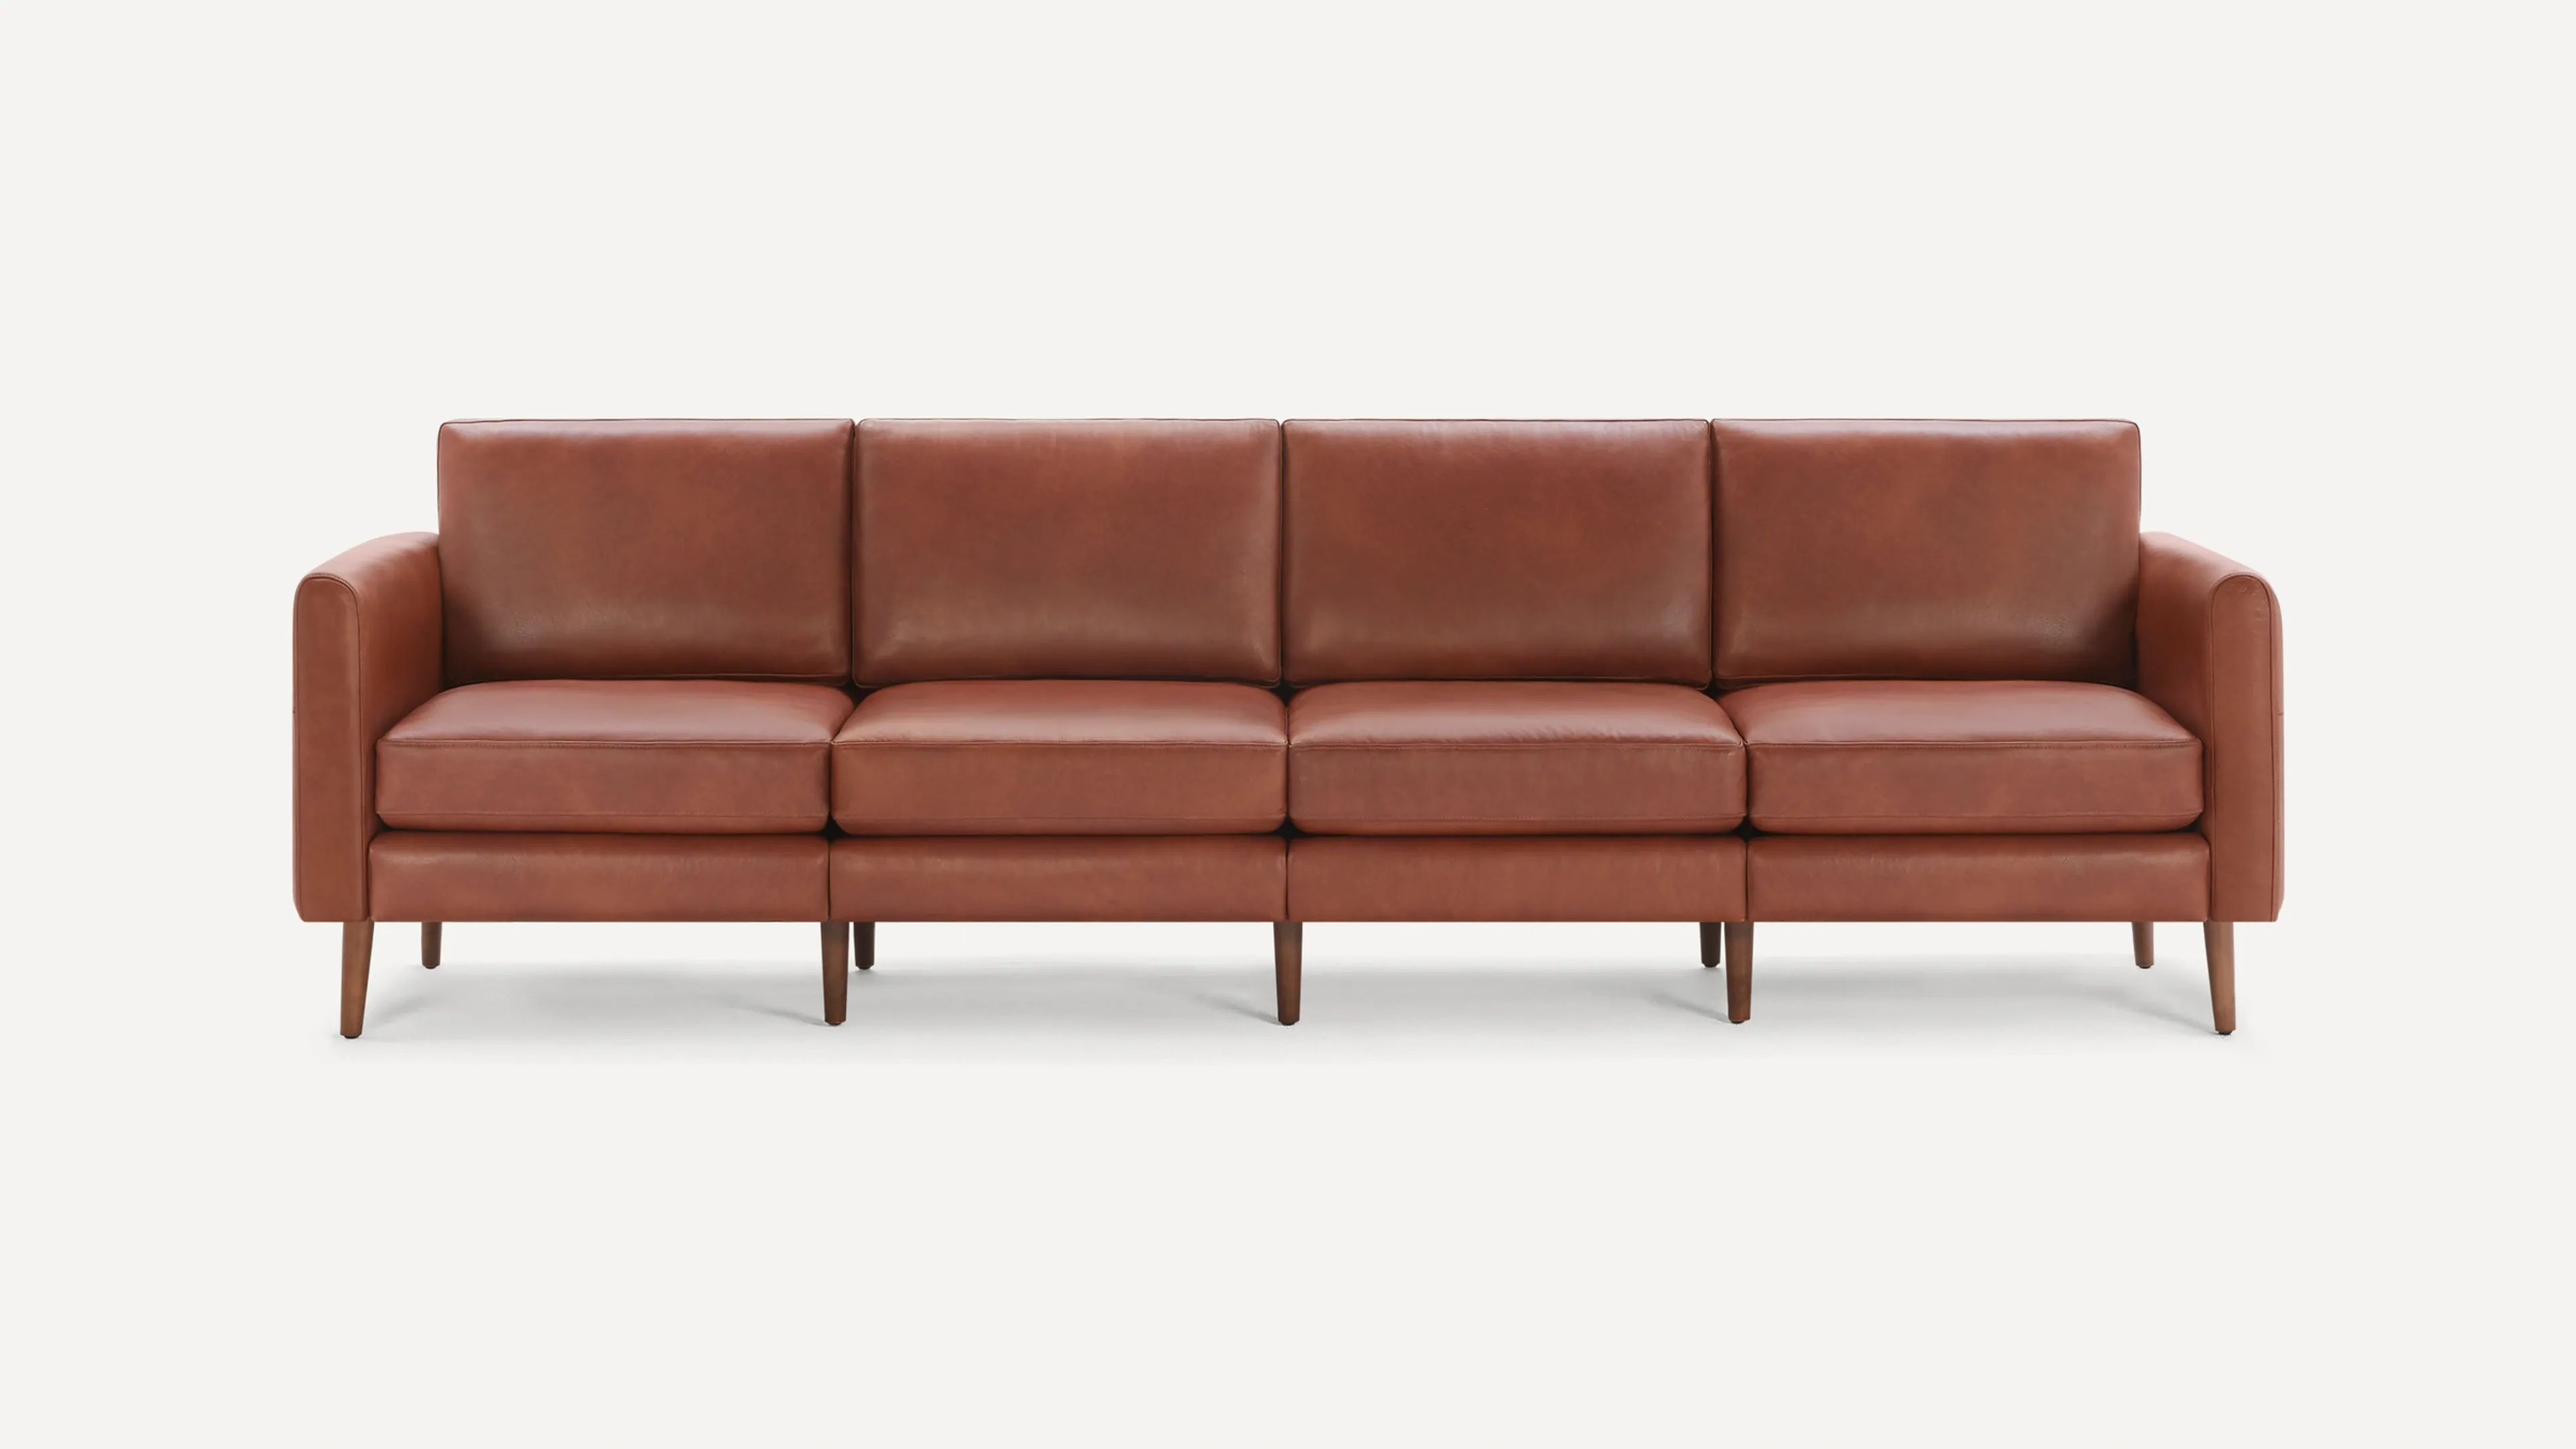 Original King Sofa in Chestnut Leather